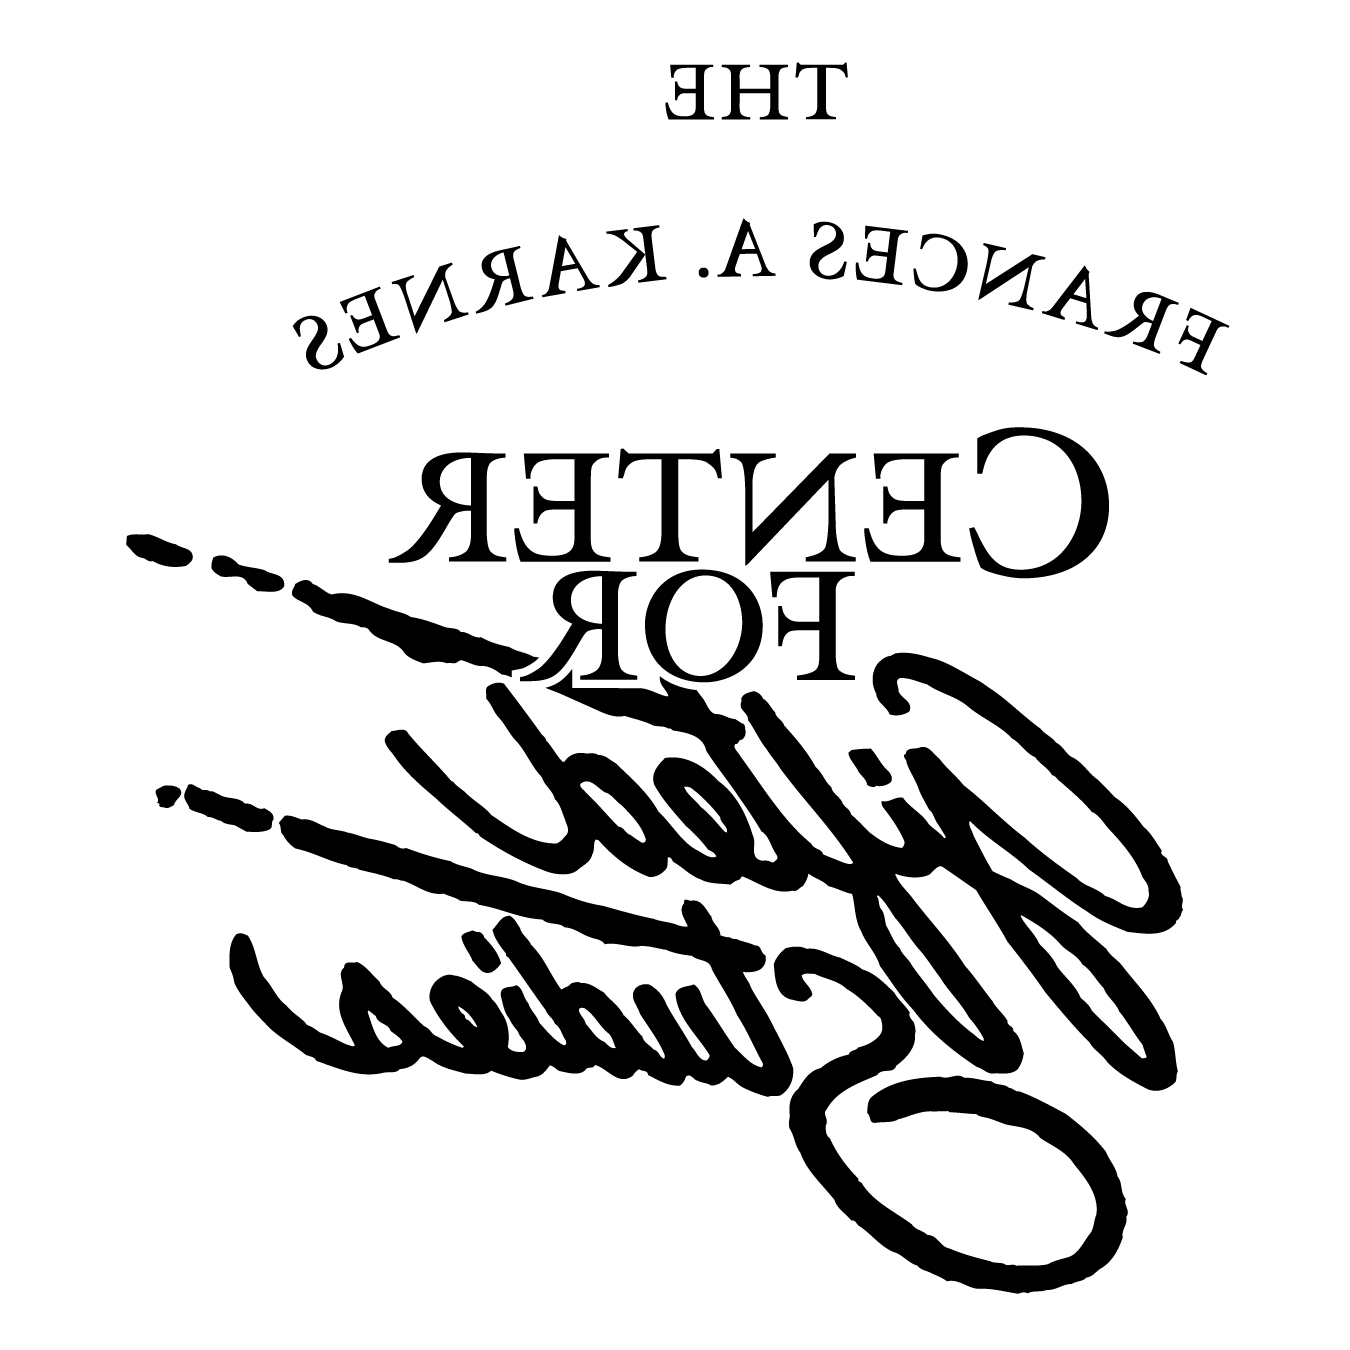 The Karnes Center logo in black and white.